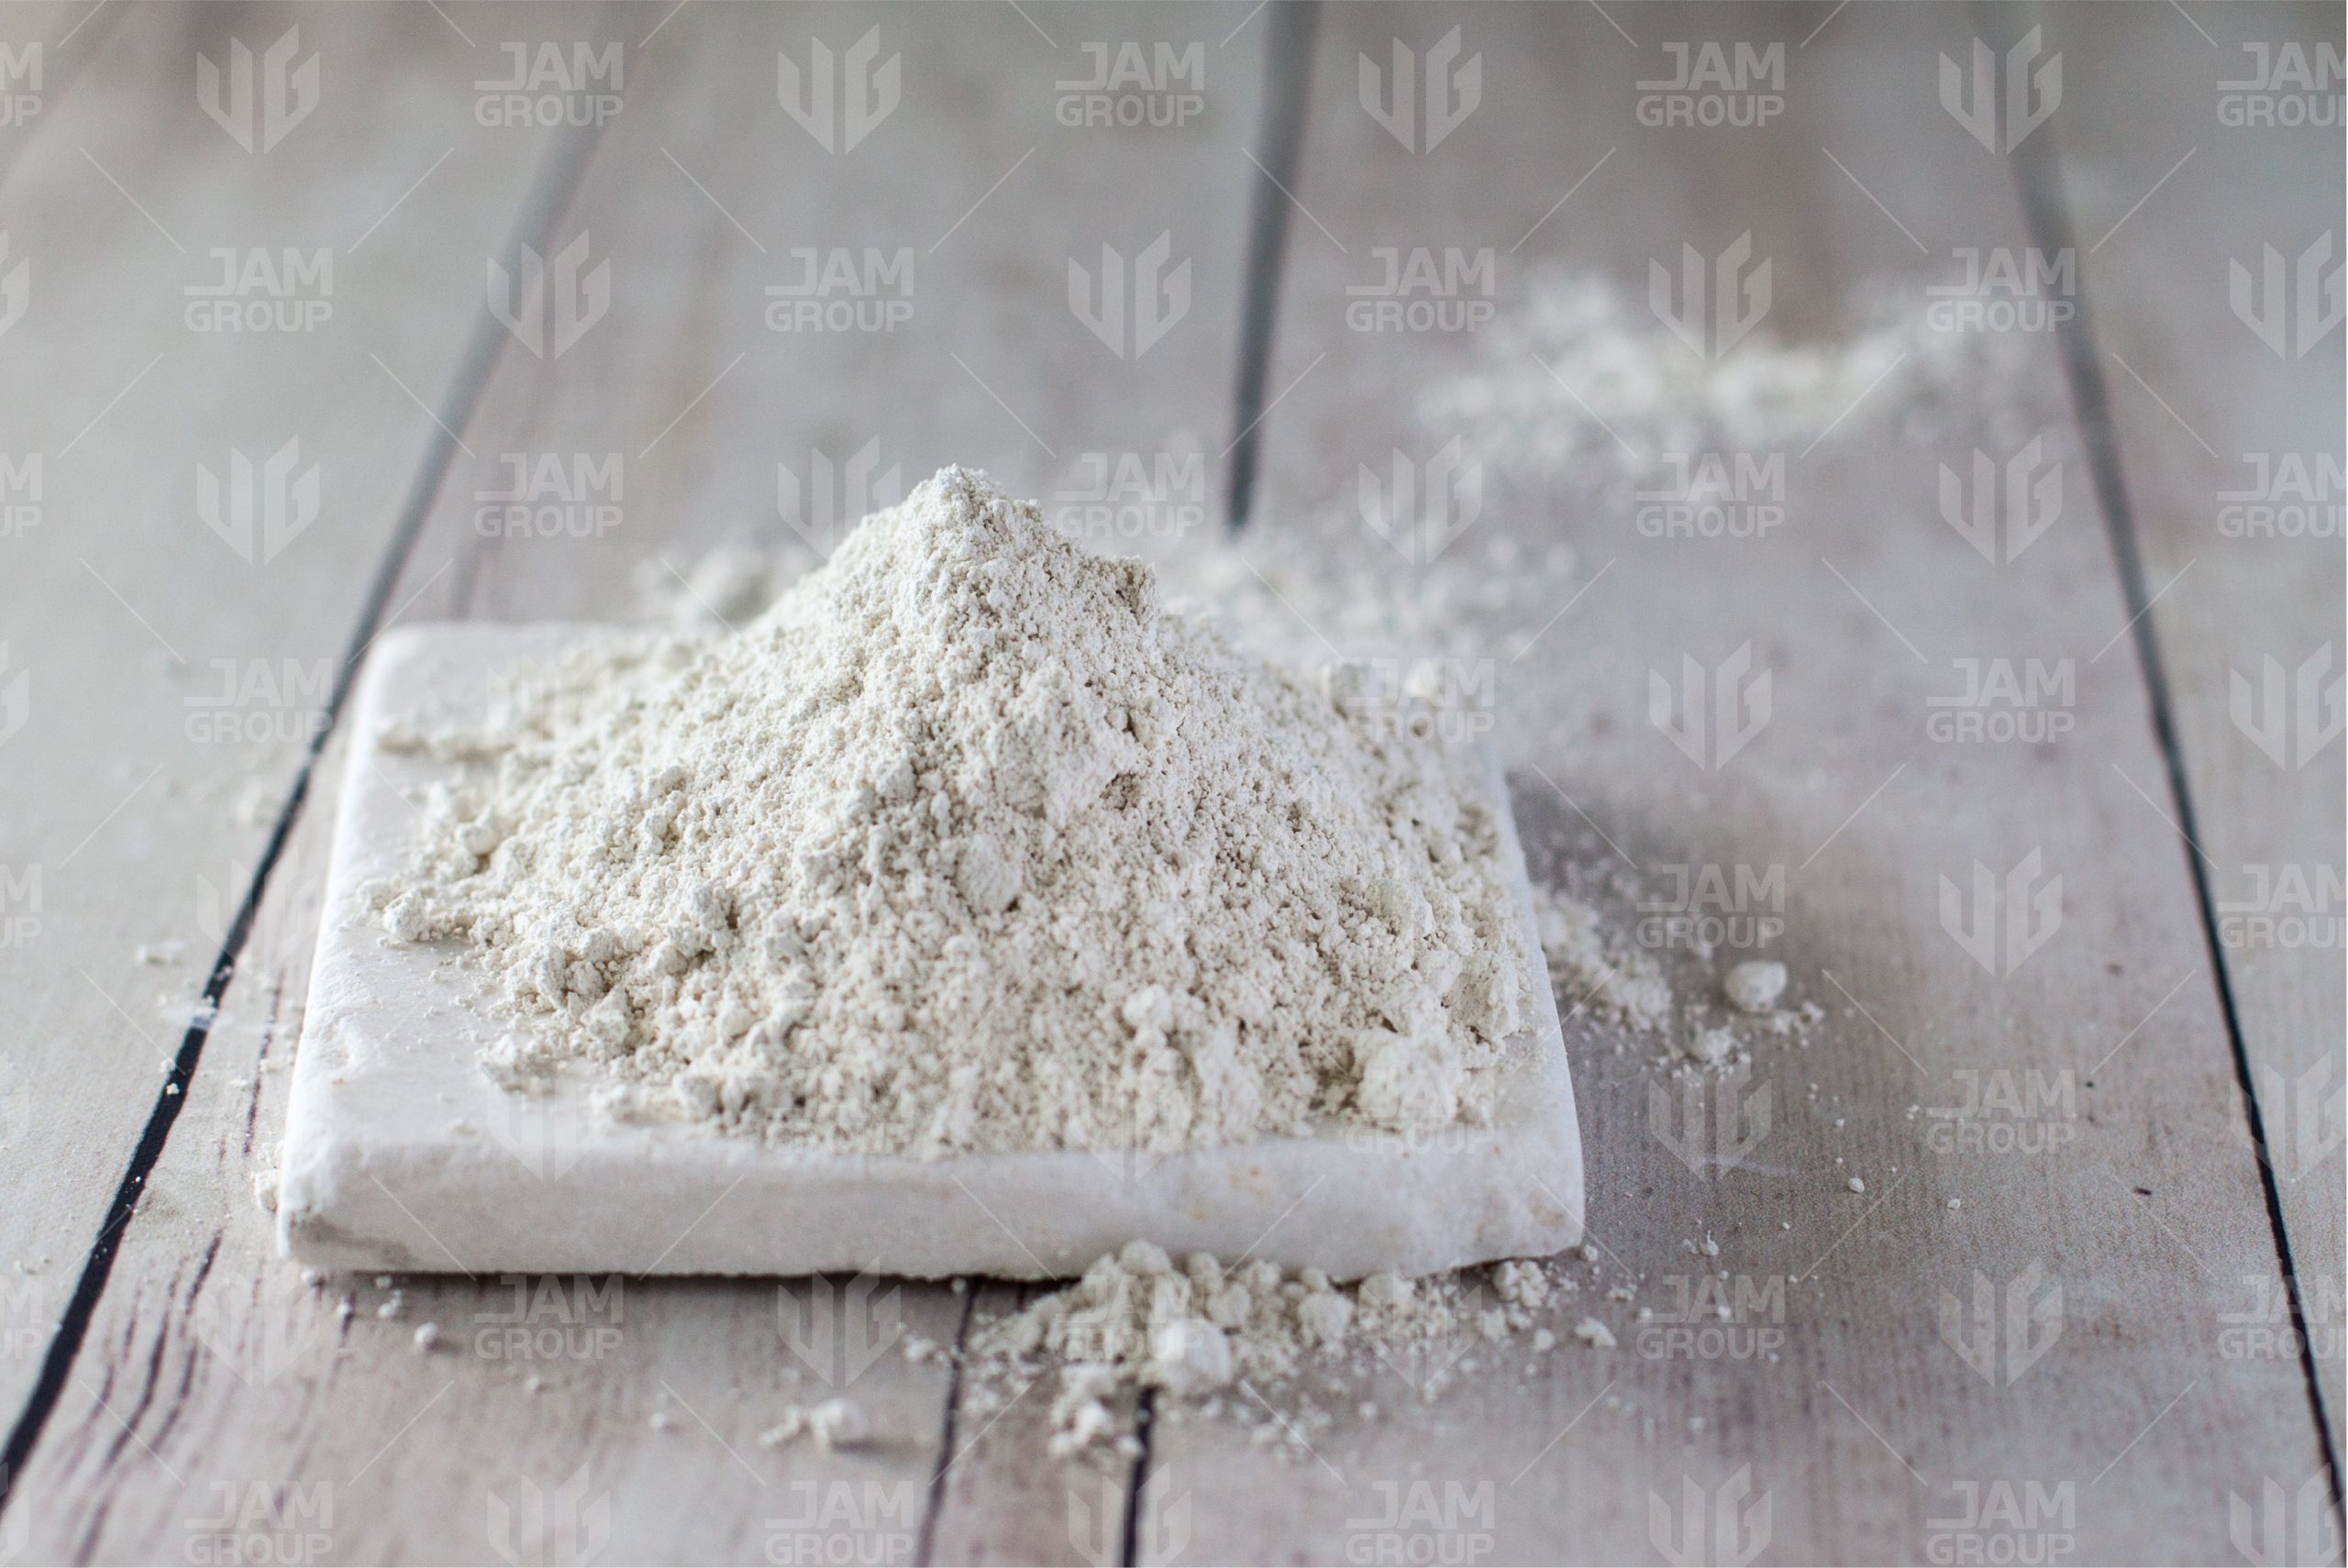 urea-moulding-powder--melamine-moulding-powder--glazing-powder-jam-group-co